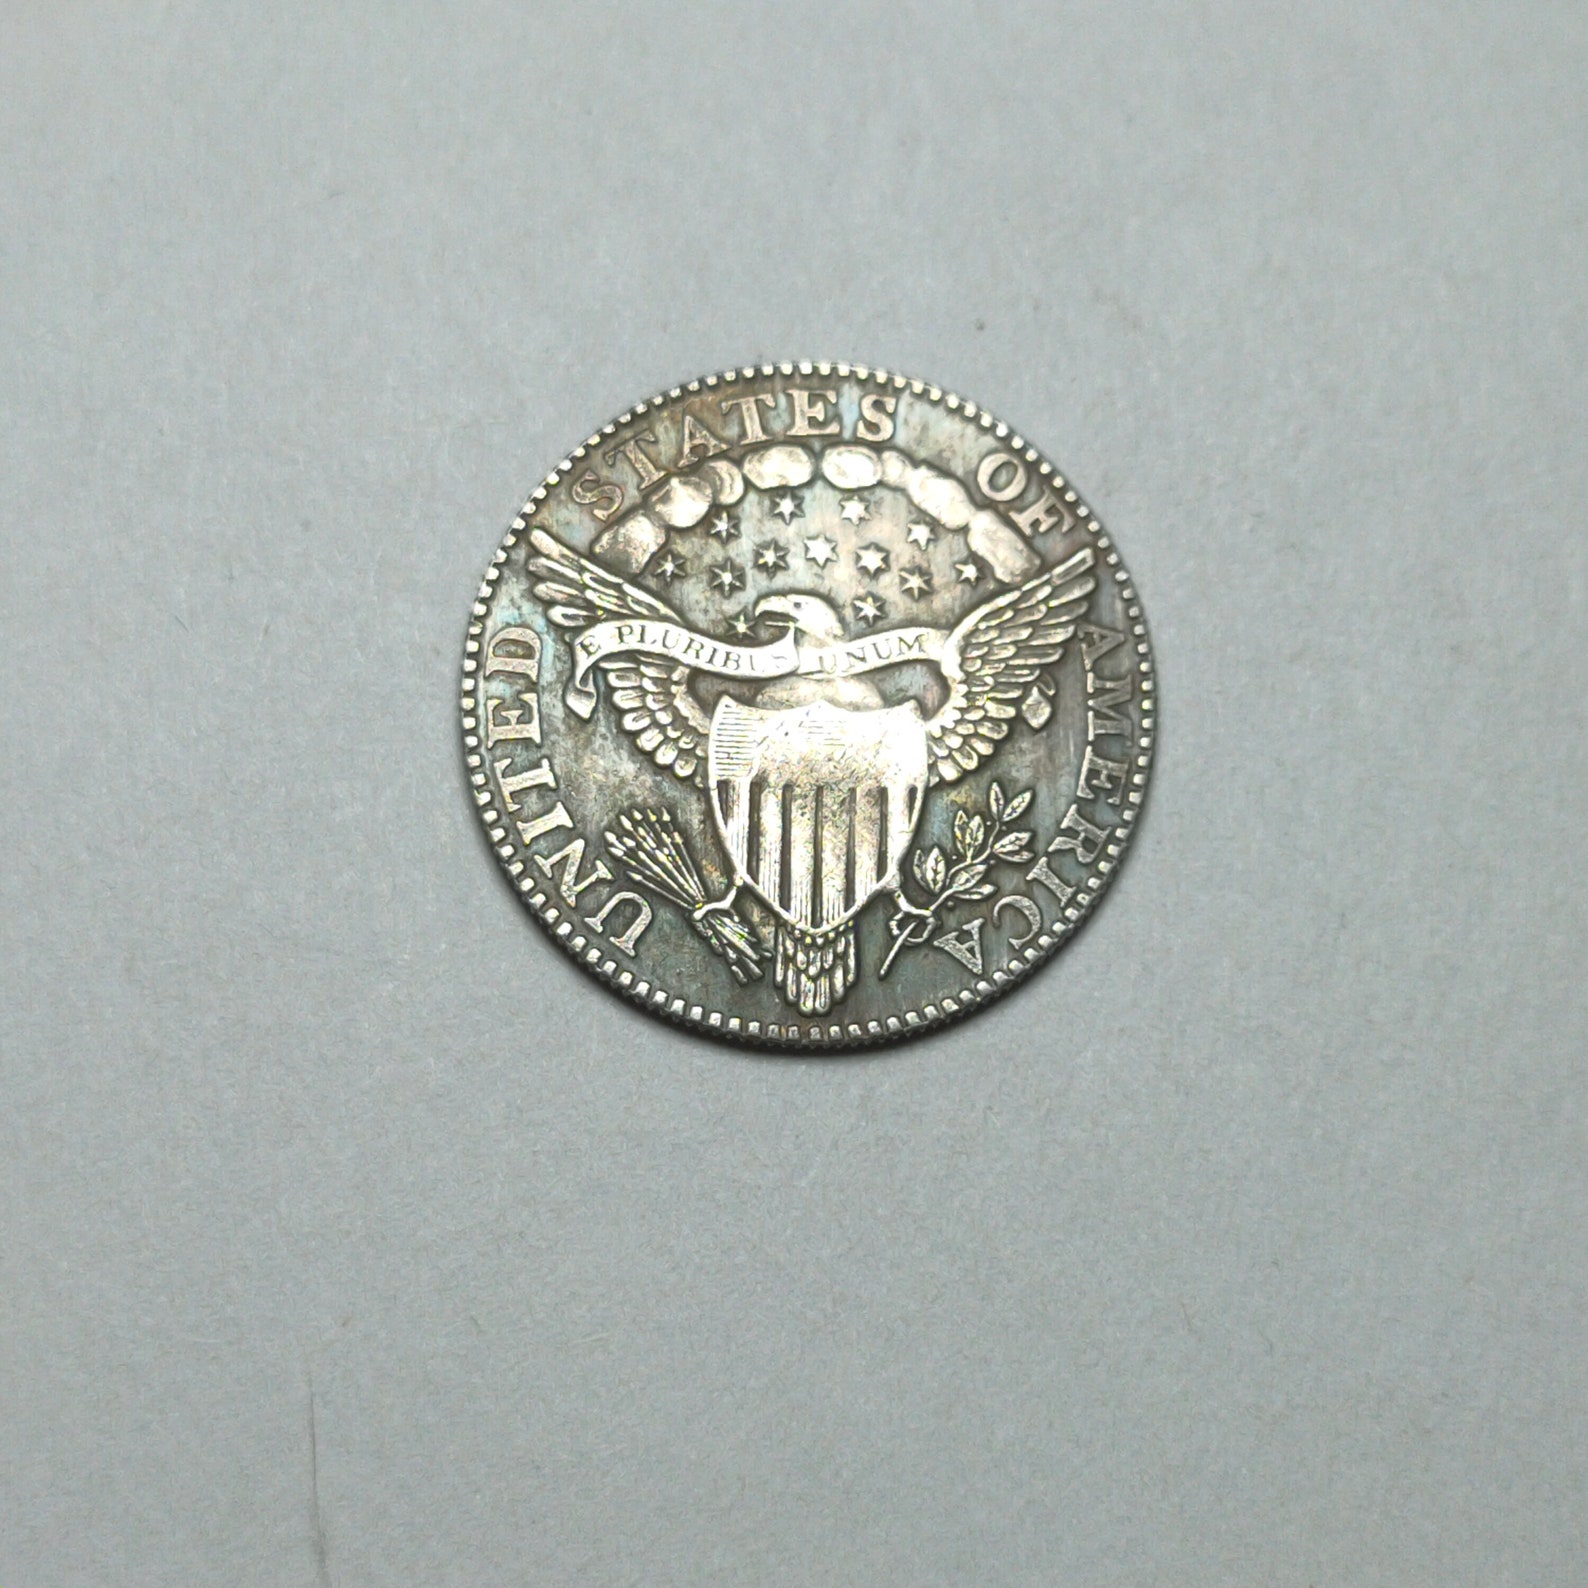 Coin half dollar United States of America 1804 | Etsy